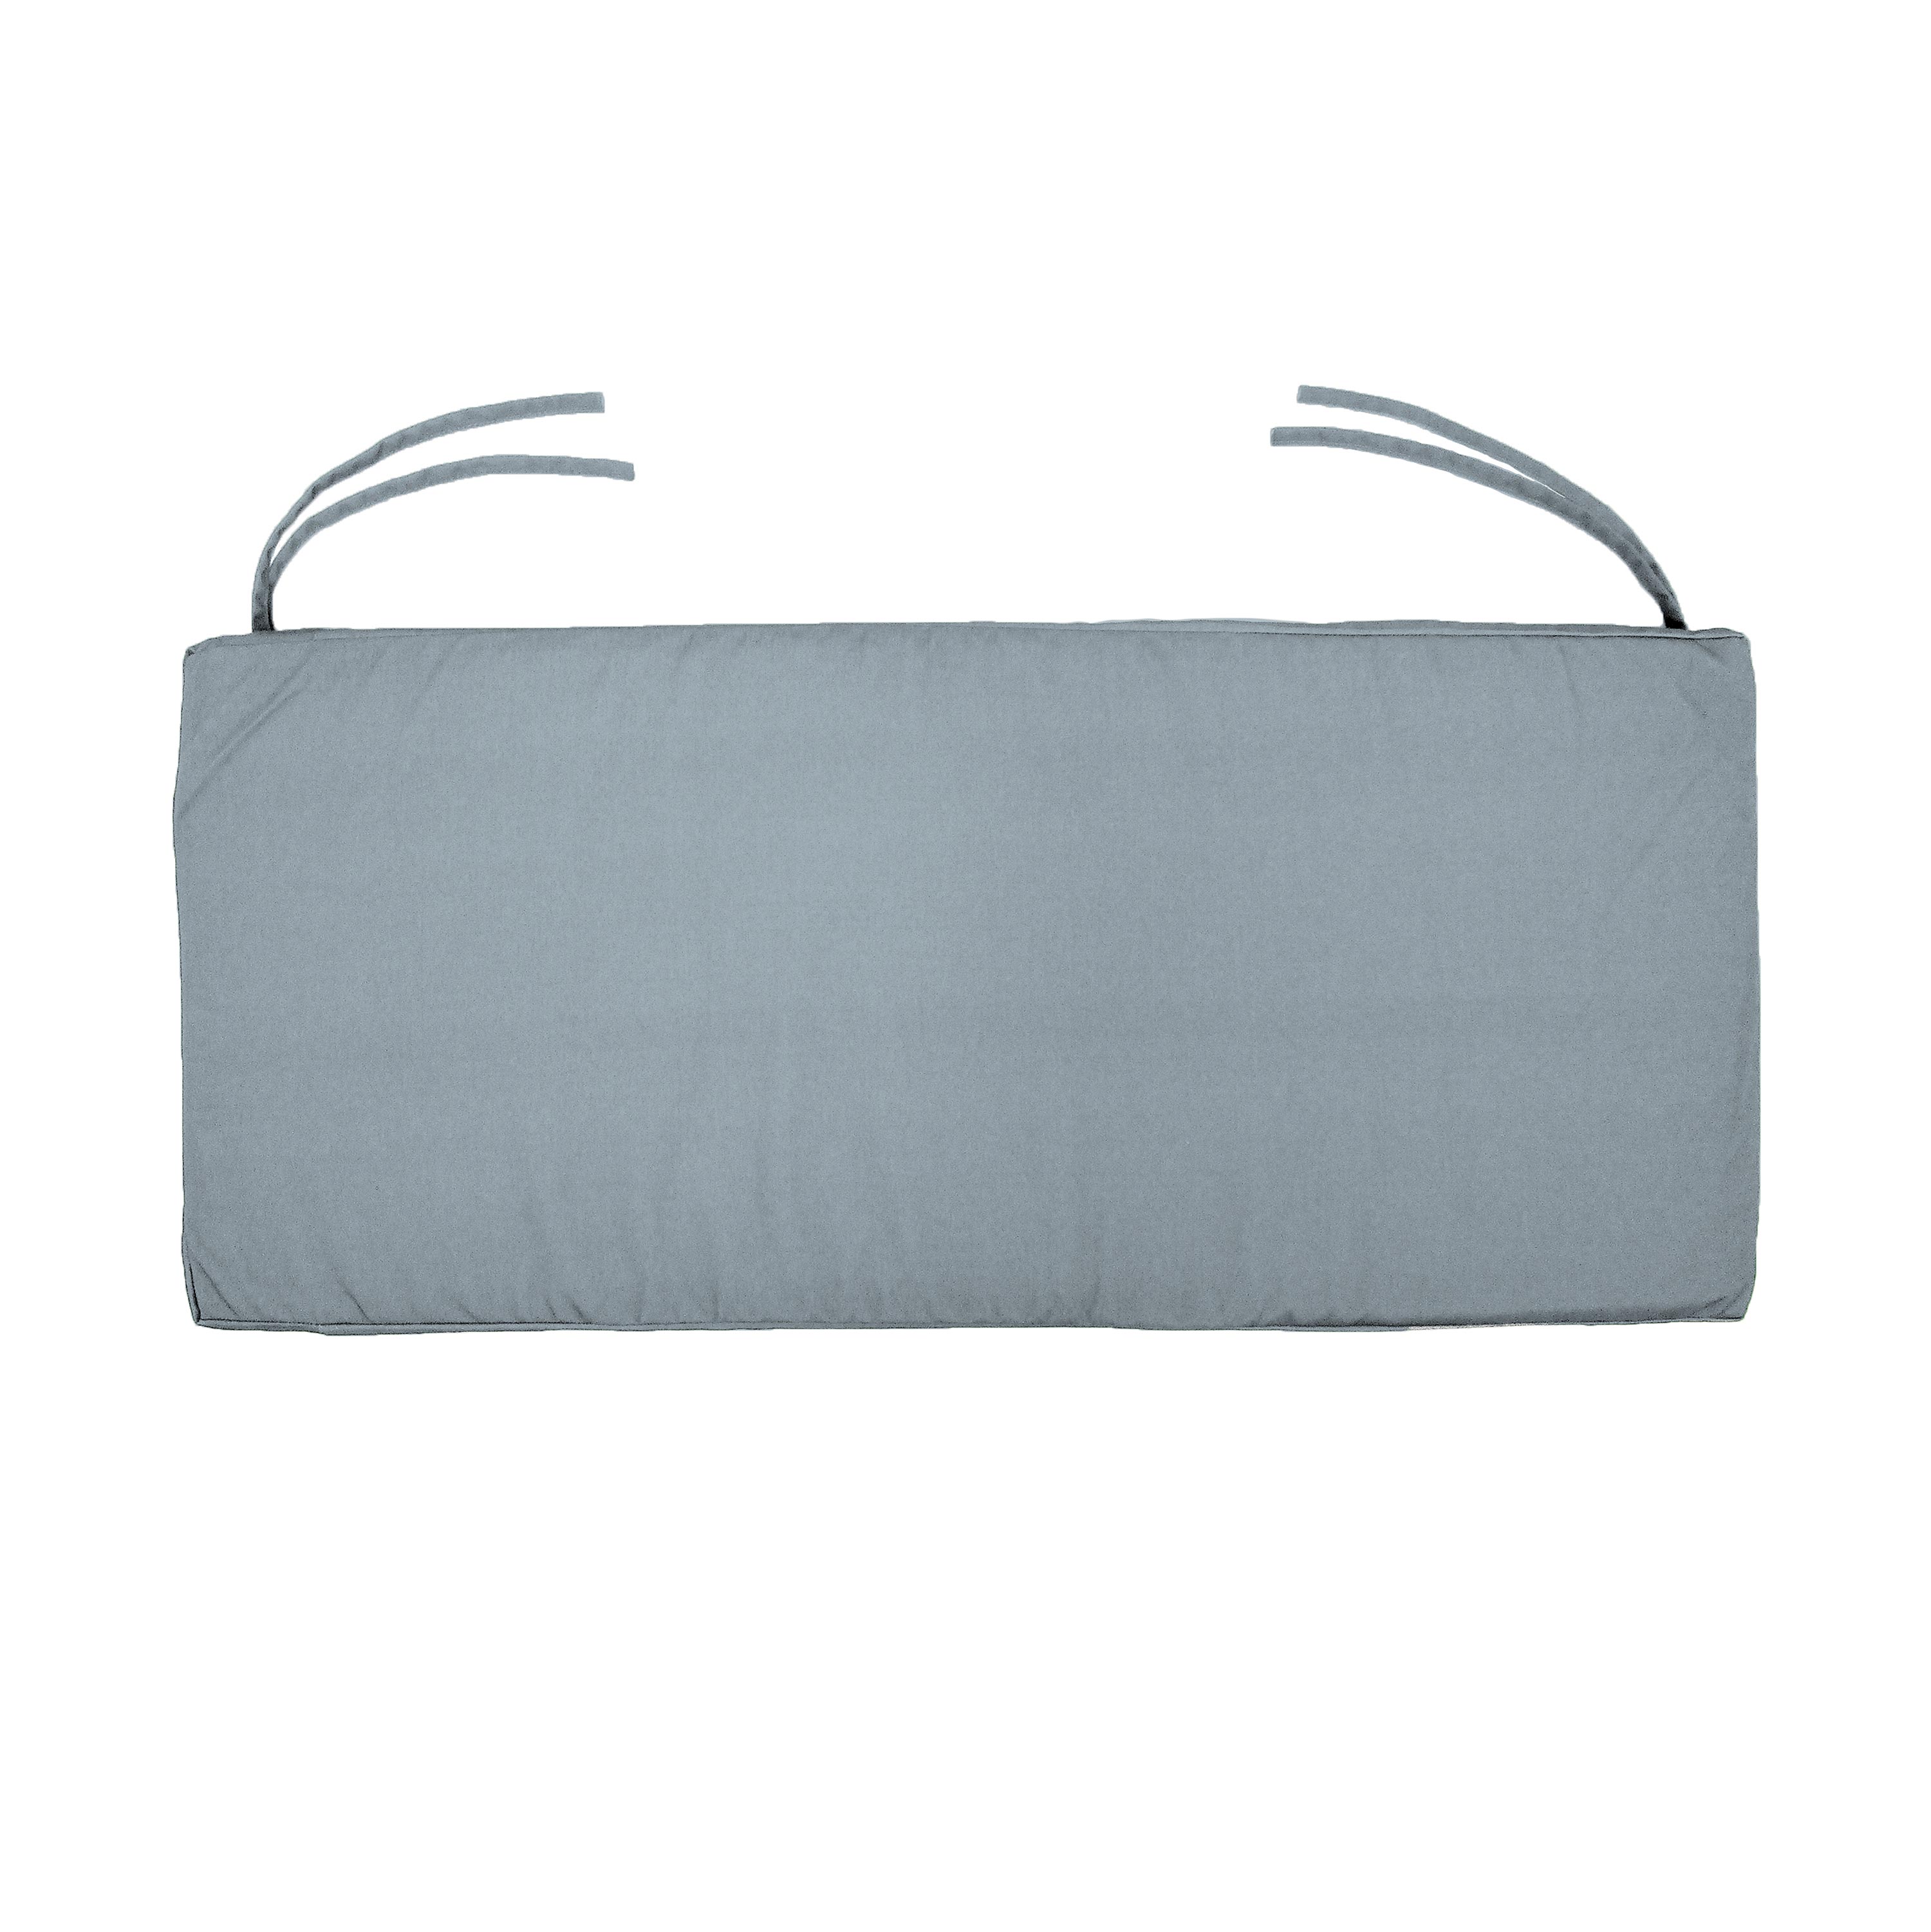 Polyester Classic Swing/Bench Cushion, 36"x 16"x 3"